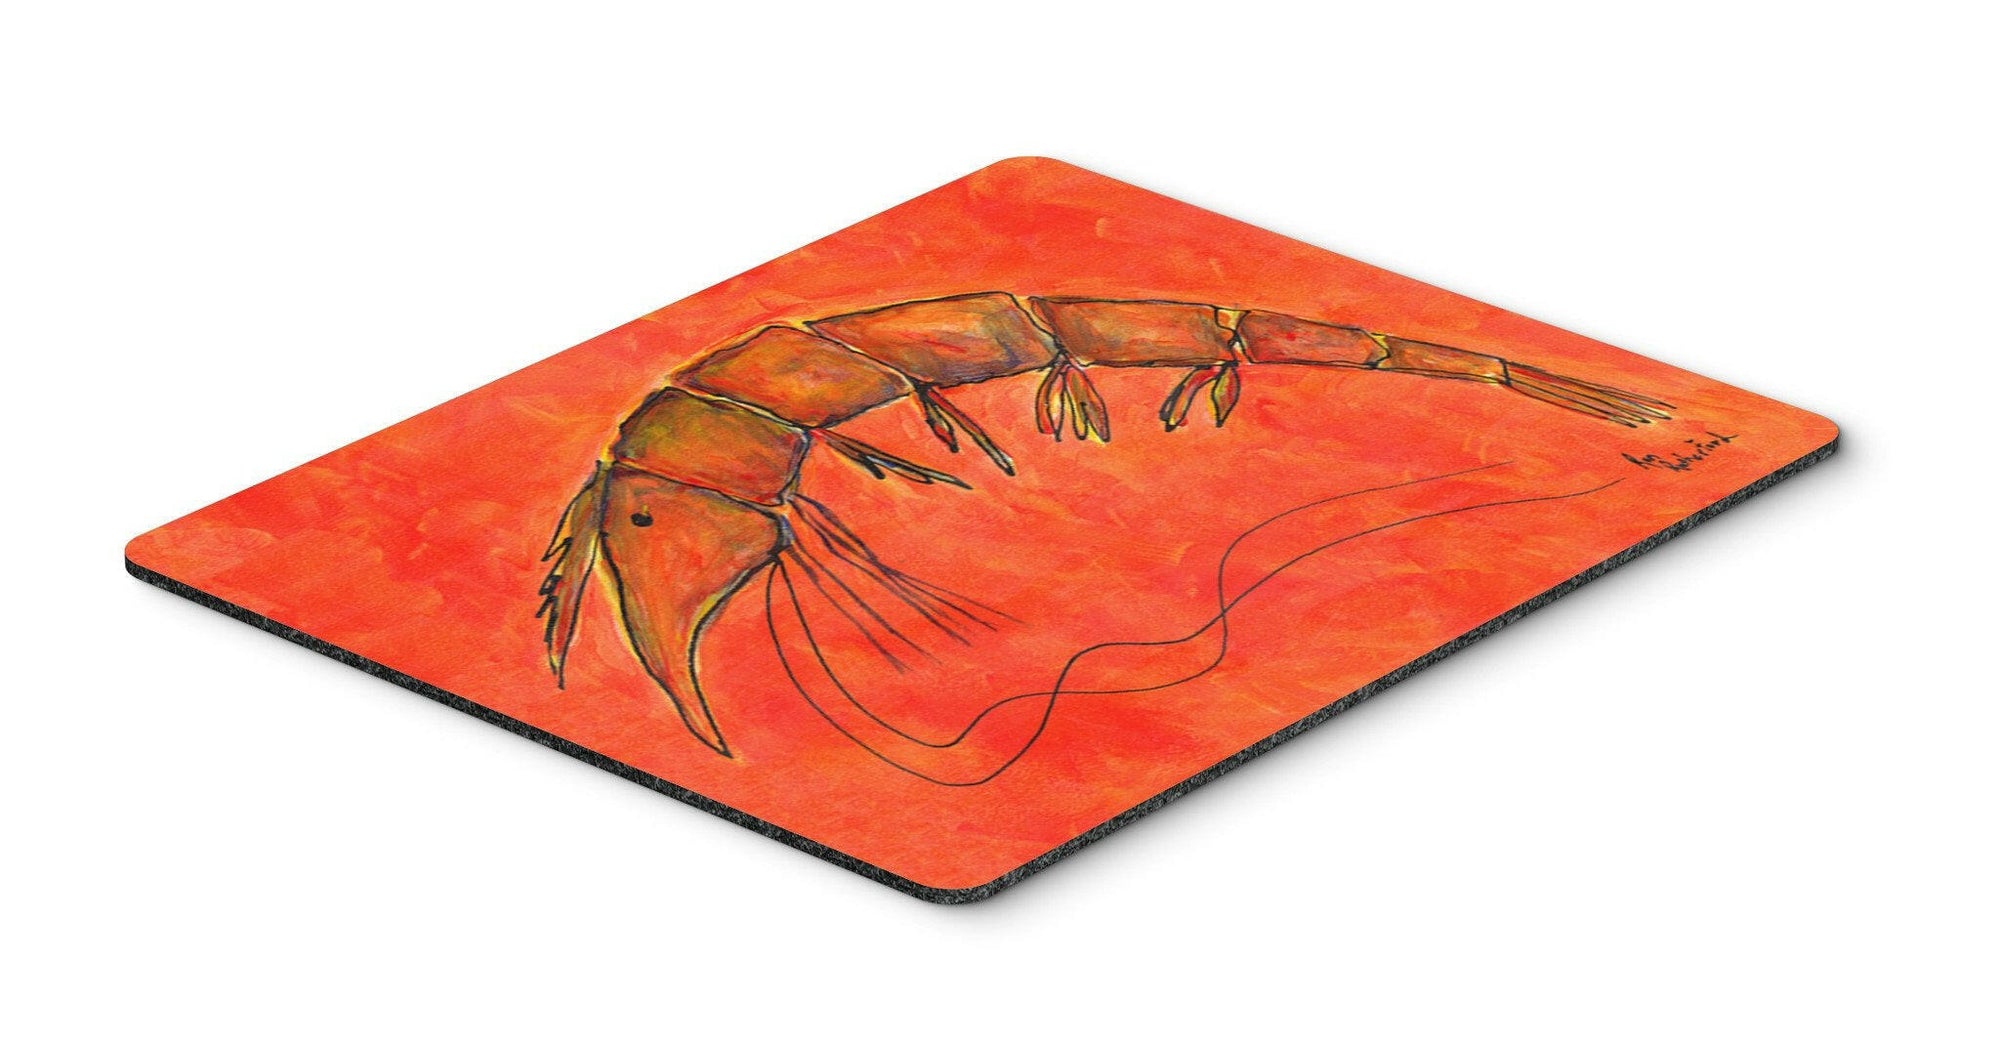 Shrimp Mouse pad, hot pad, or trivet by Caroline's Treasures